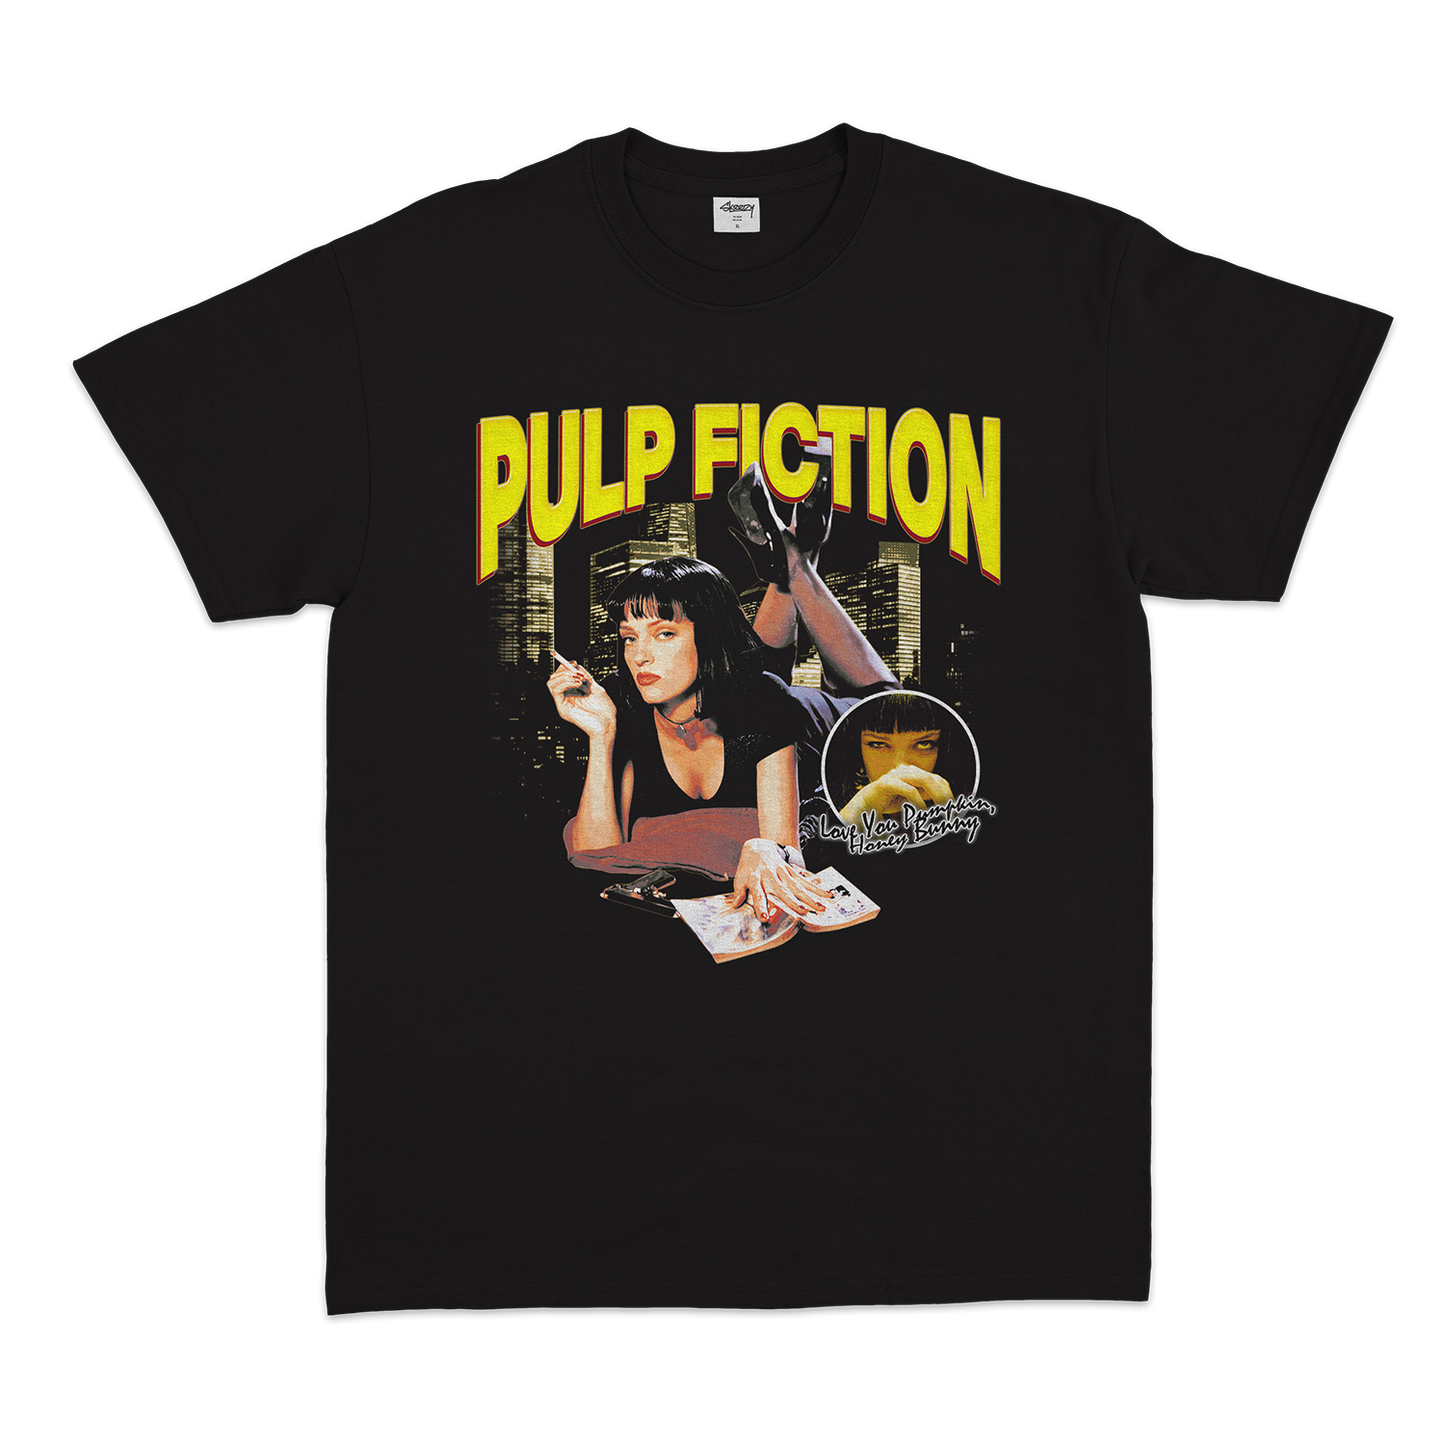 Pulp Fiction tee